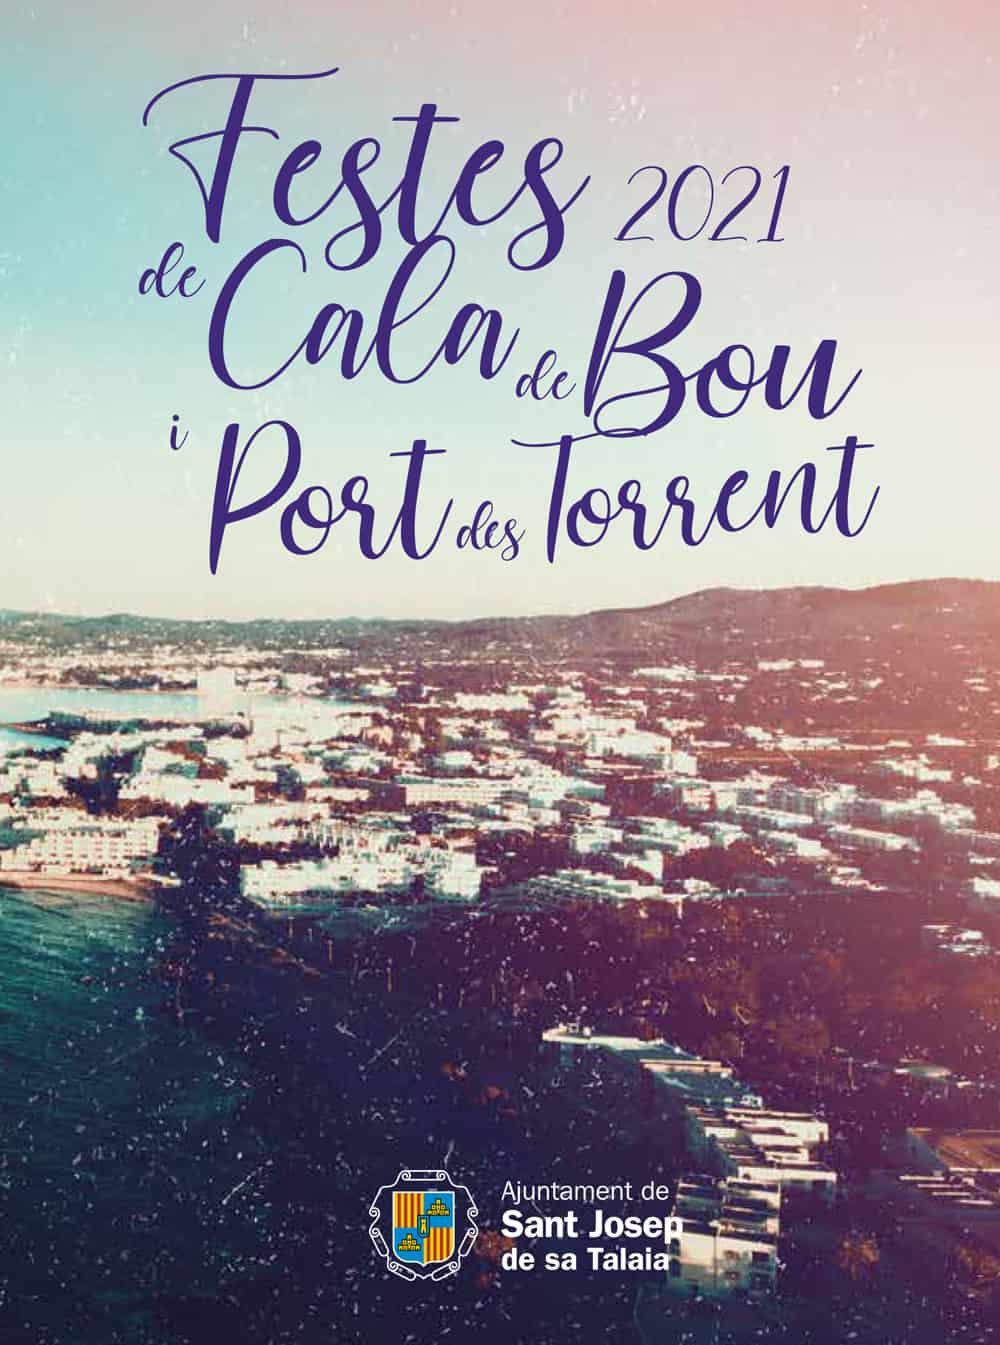 festival-di-cala-de-bou-e-port-des-torrent-ibiza-2021-welcometoibiza